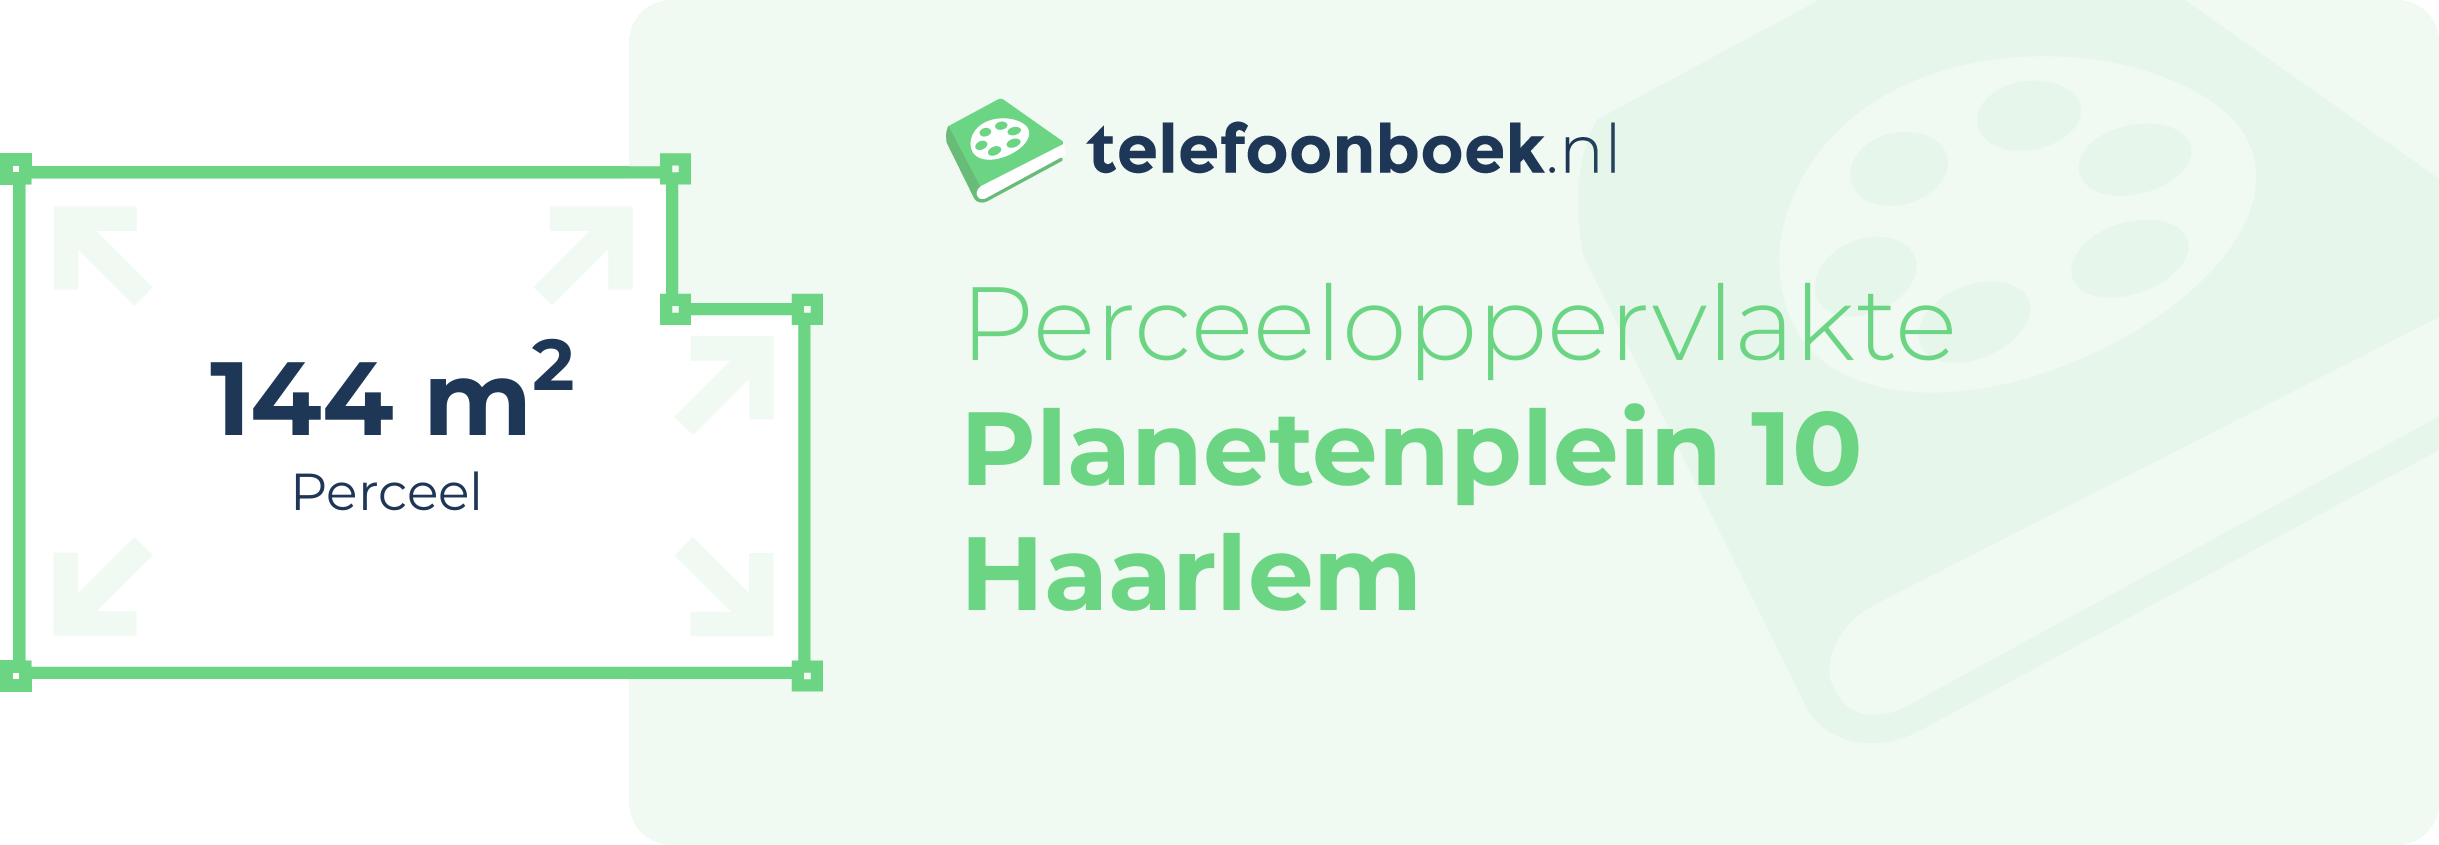 Perceeloppervlakte Planetenplein 10 Haarlem